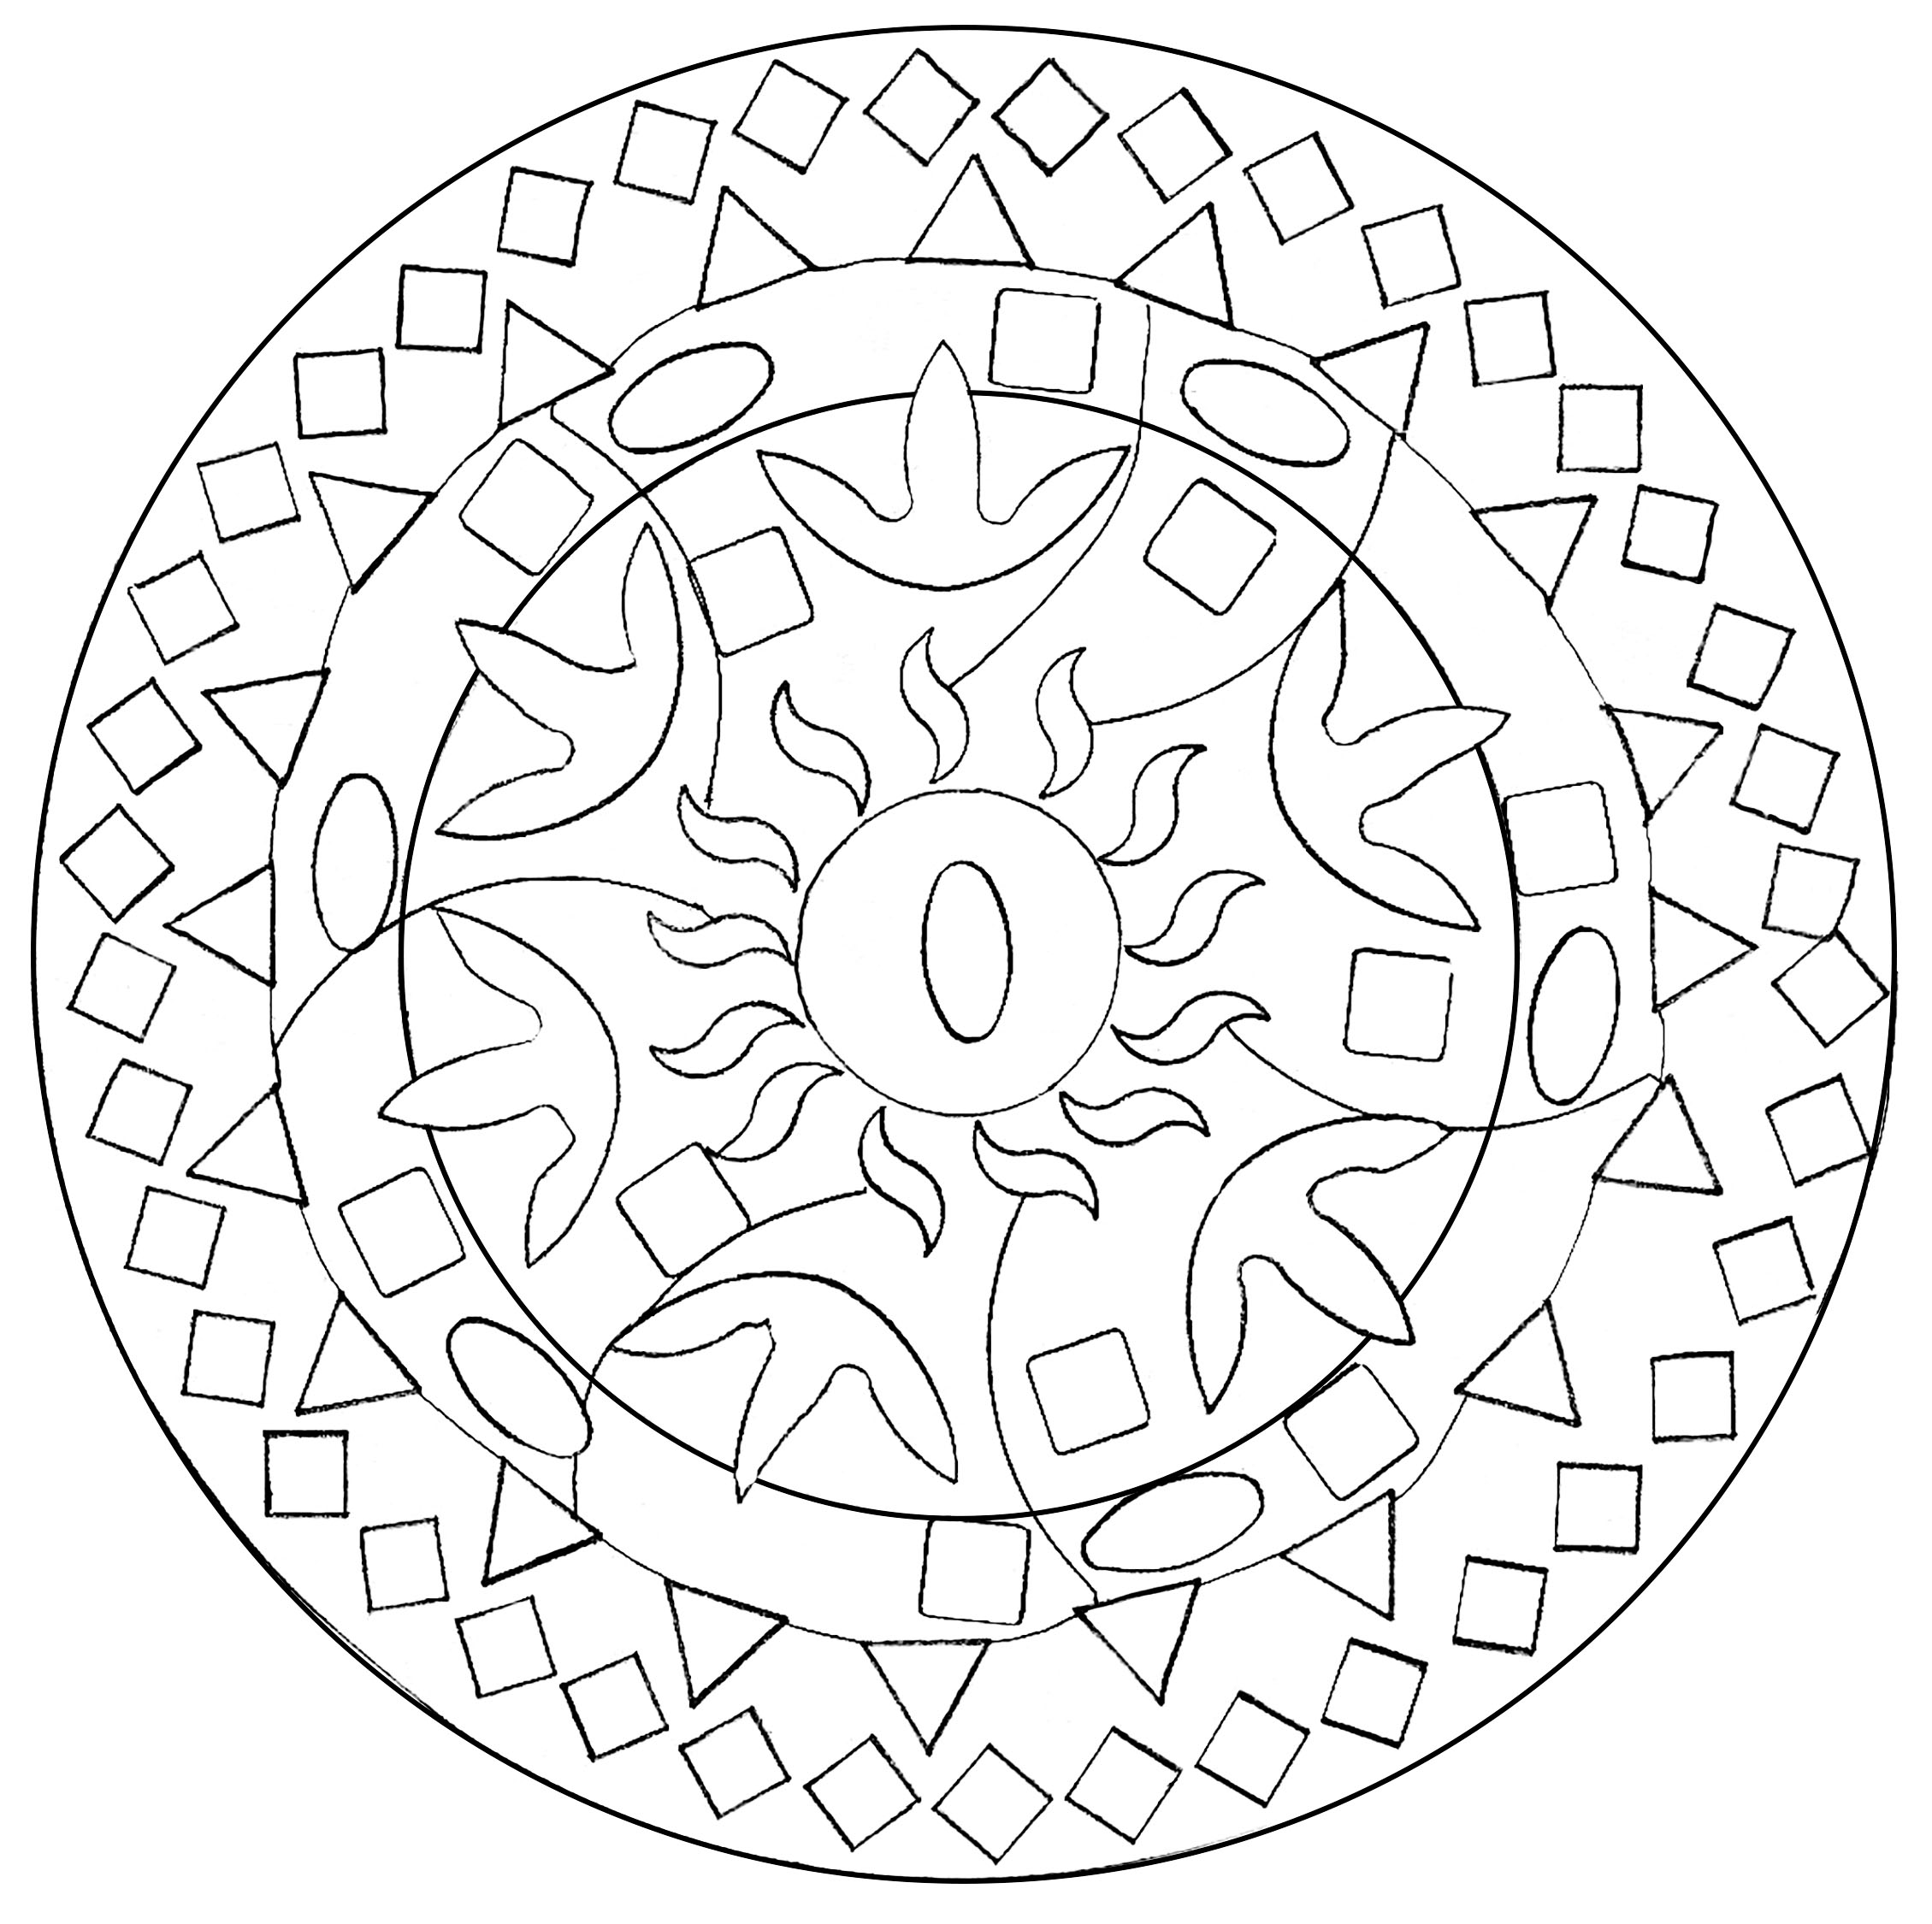 Mandala carres lamedas par domândaloa - 17